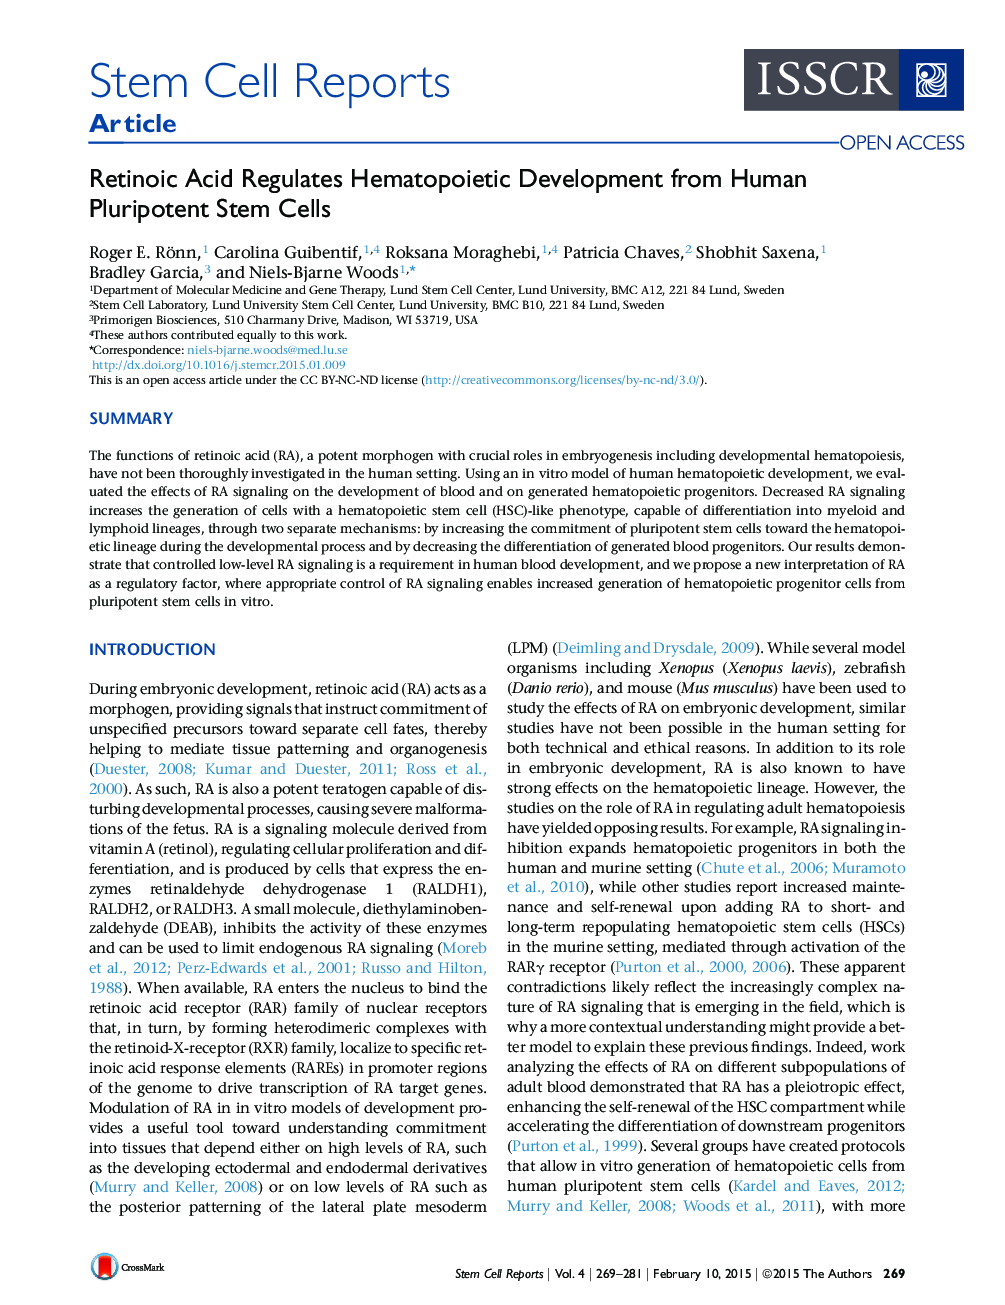 Retinoic Acid Regulates Hematopoietic Development from Human Pluripotent Stem Cells 